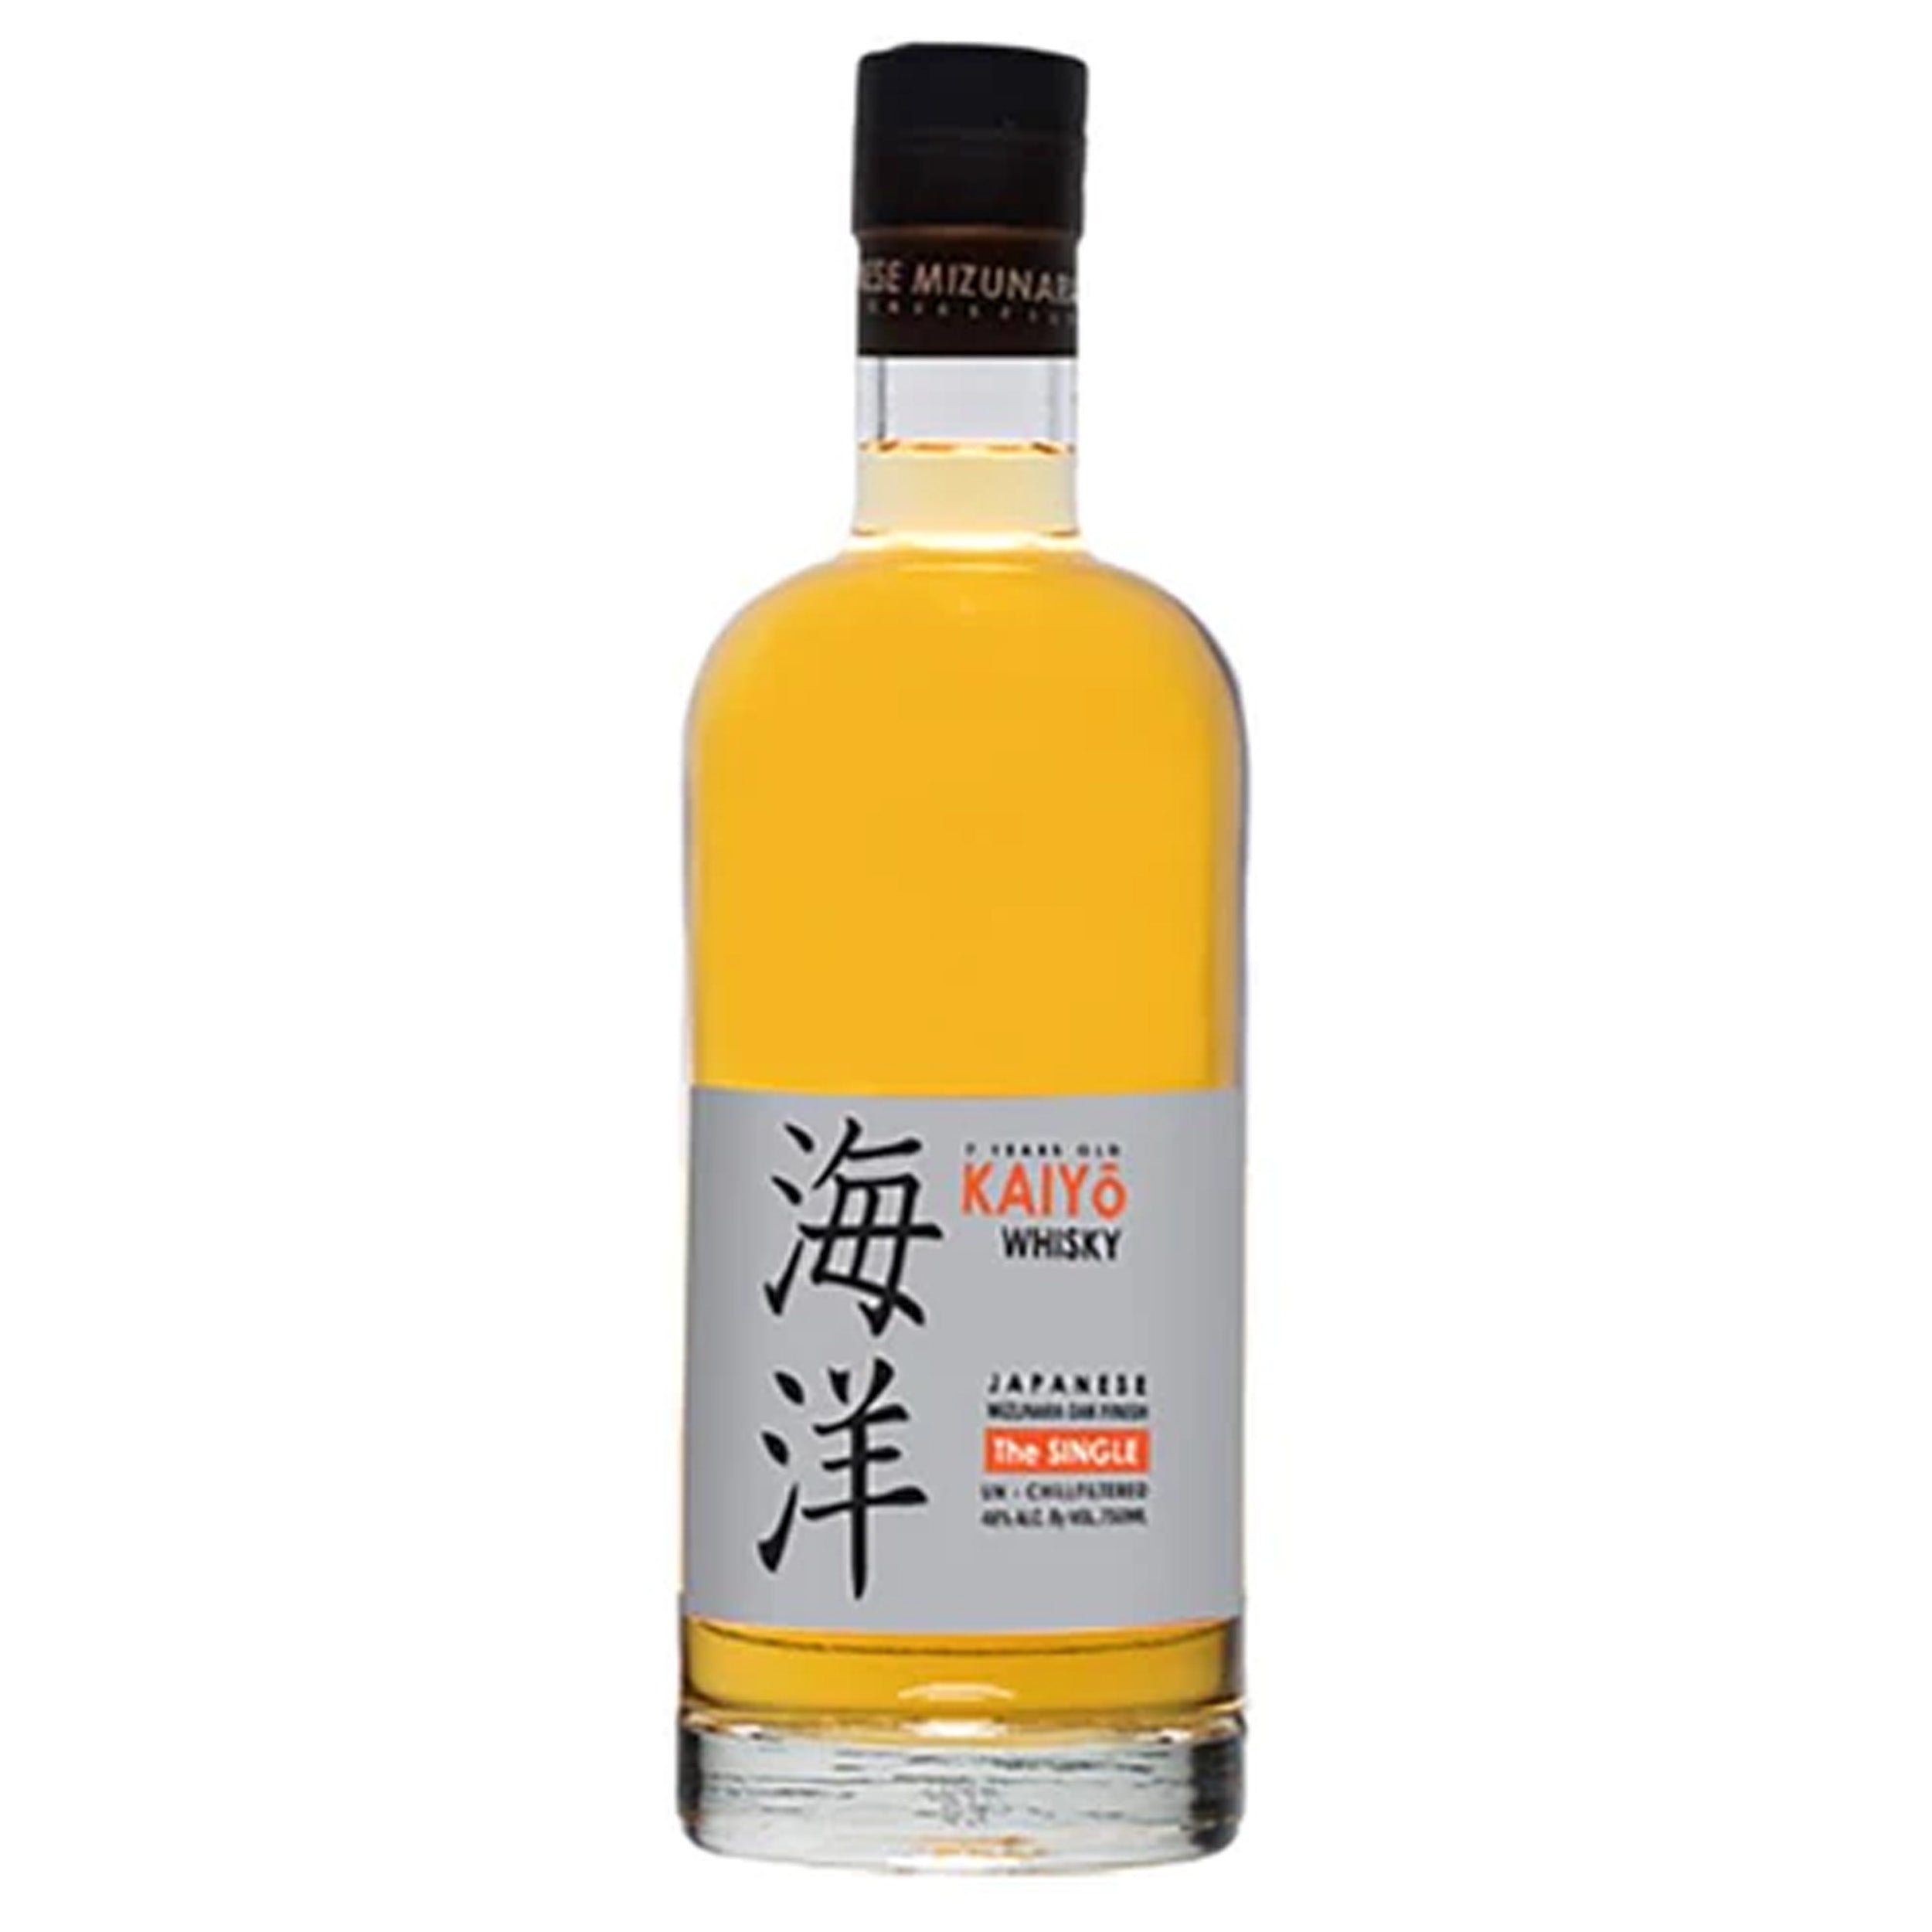 Kaiyo The Single 7 Year Old Japanese Whisky